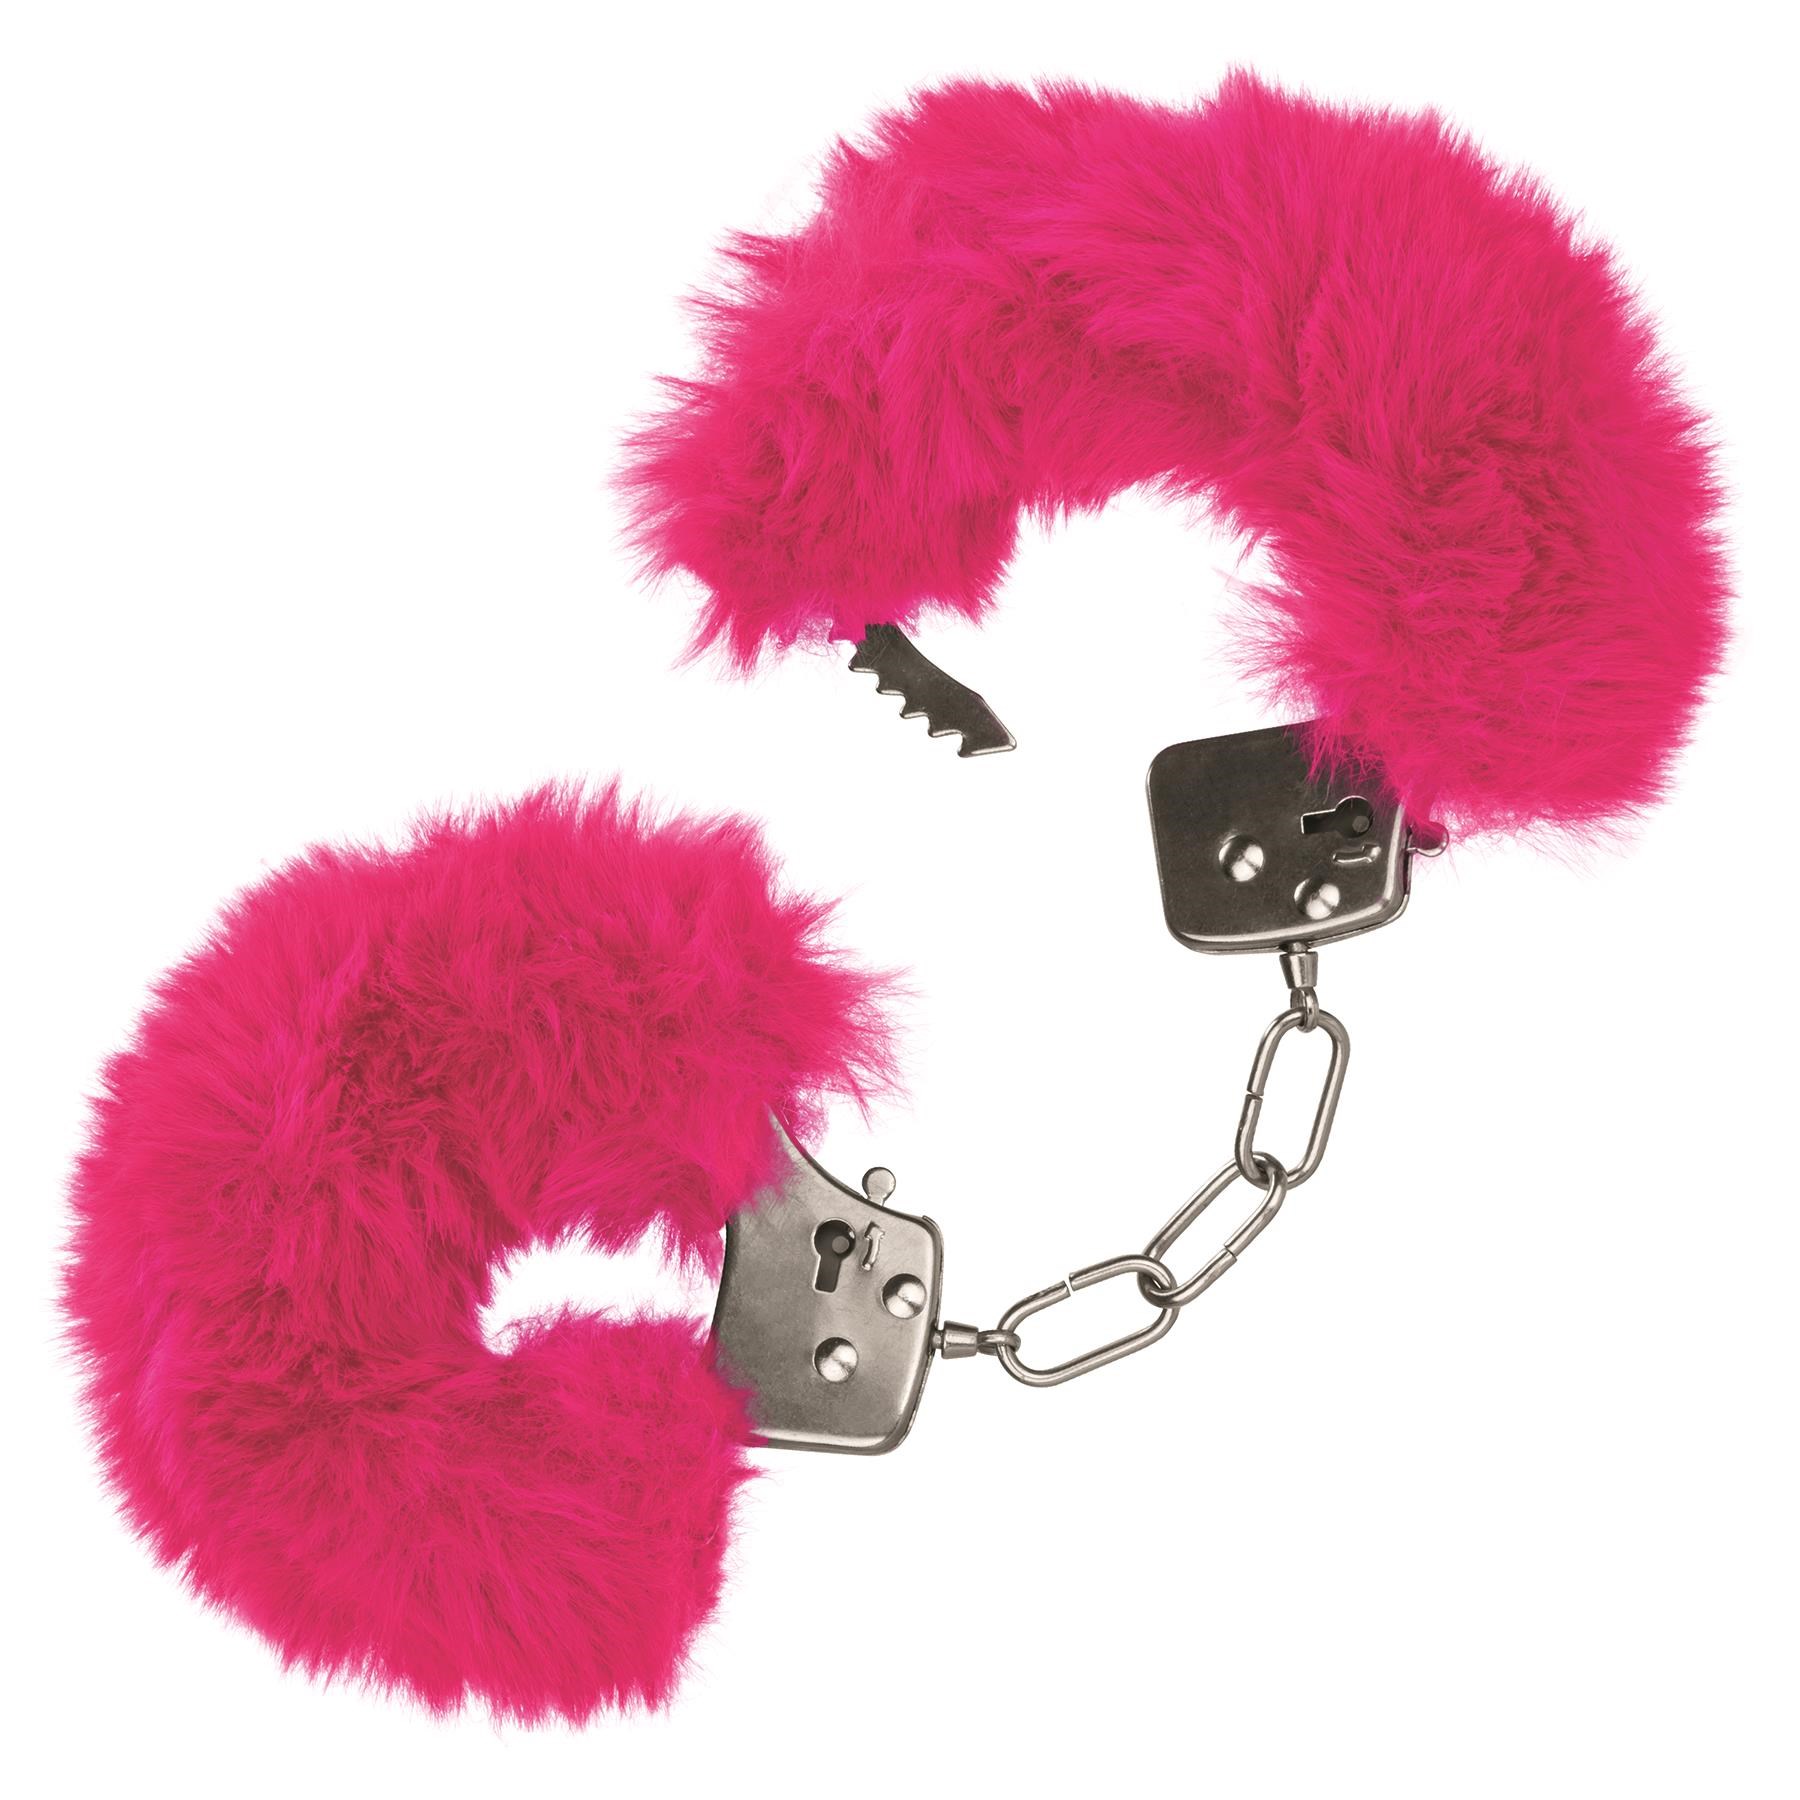 Ultra Furry Cuffs - Product Shot - Pink